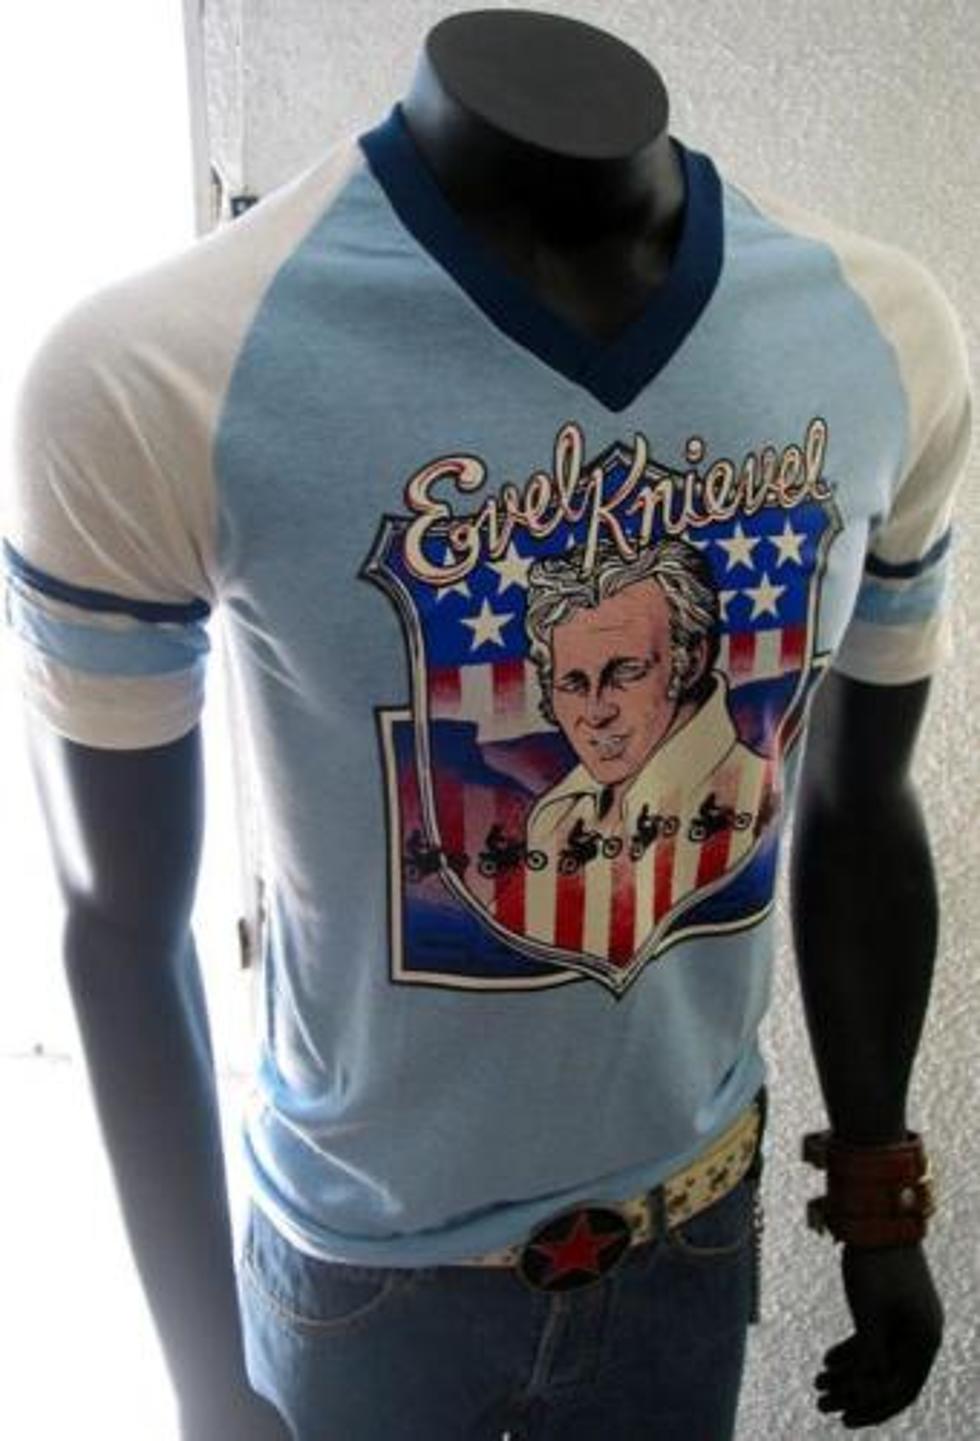 Super Rare Original Evel Knievel Twin Falls T-Shirt Found On Ebay